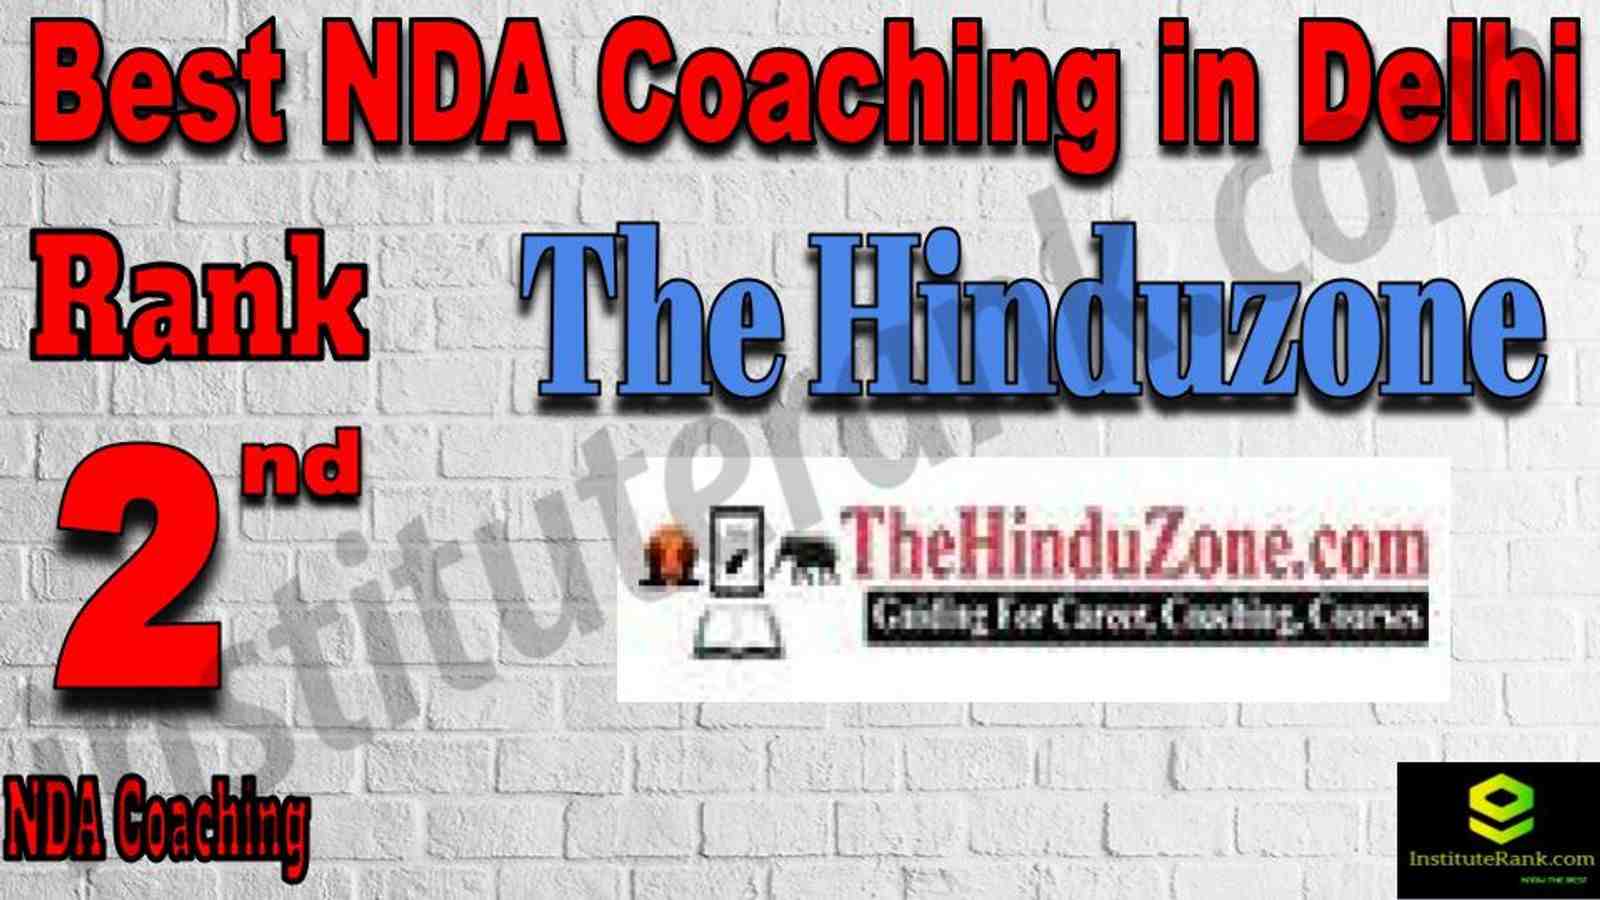 Rank 2 Best NDA Coaching in Delhi